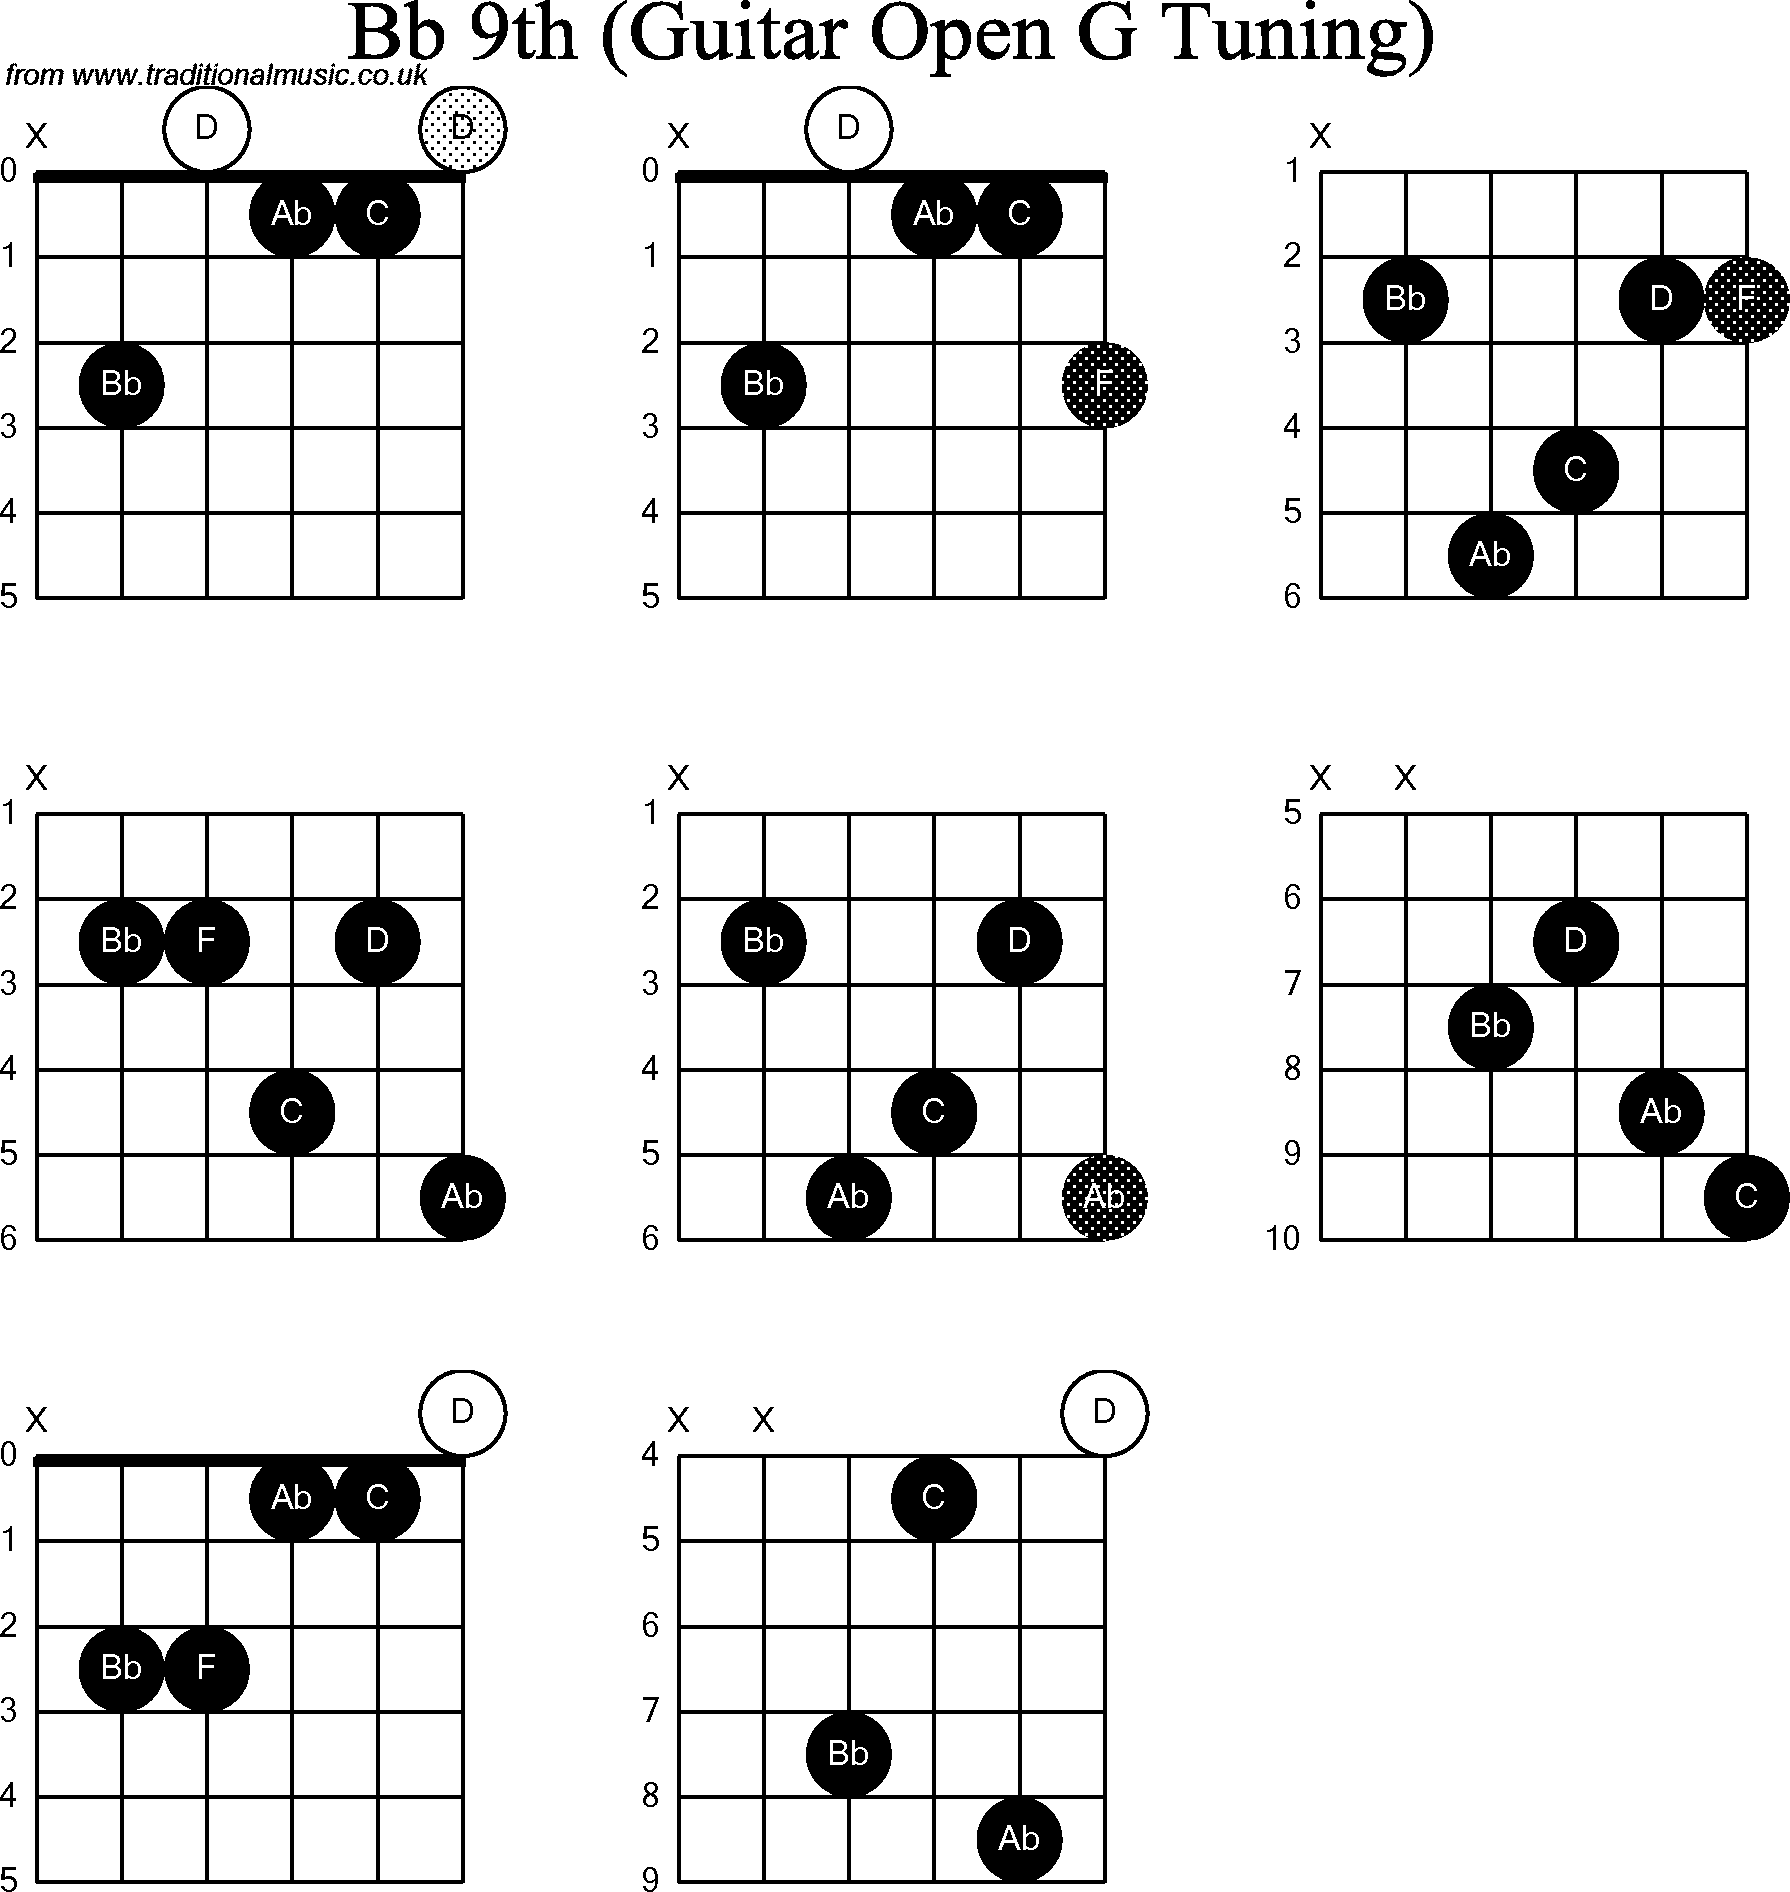 Chord diagrams for Dobro Bb9th